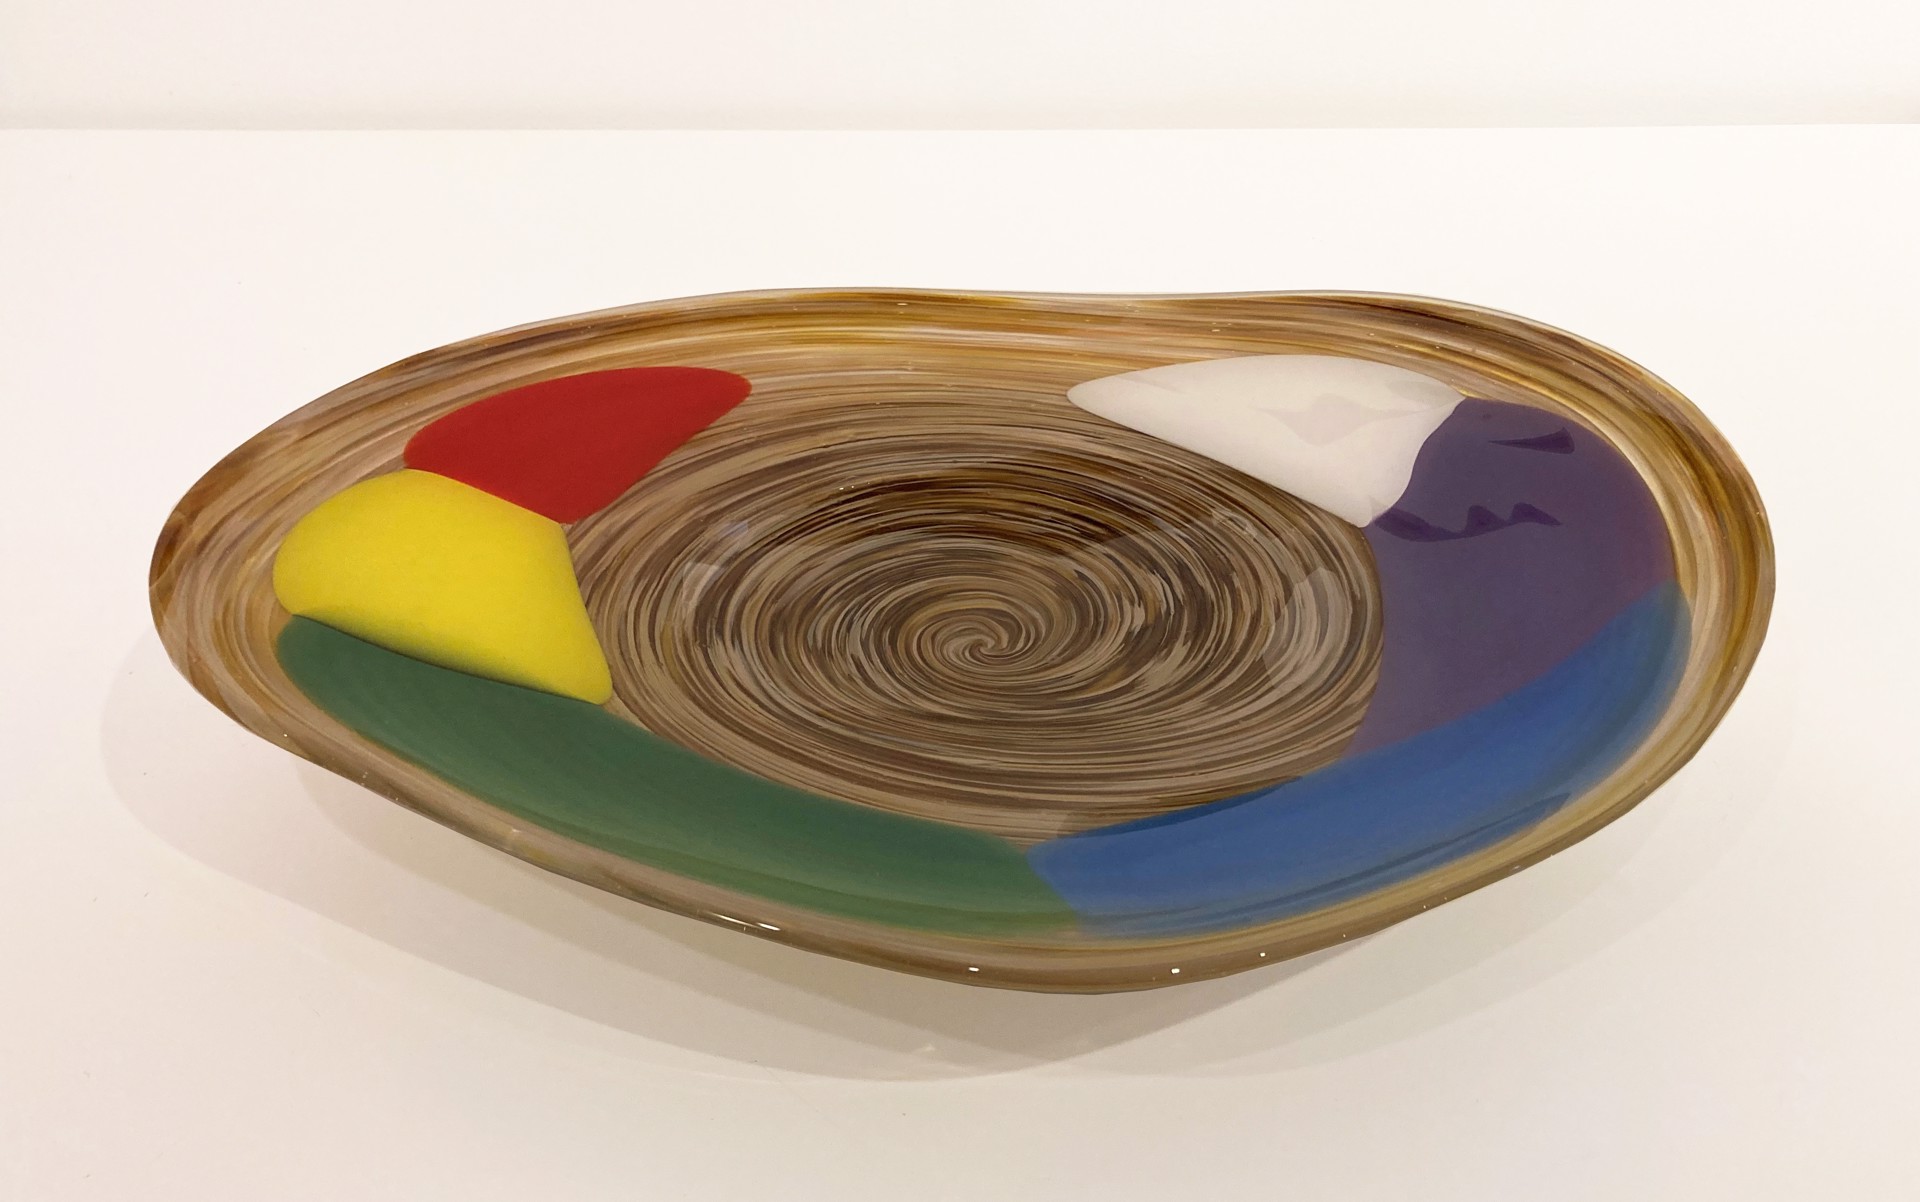 Painter's Pallate Platter by Tyler Kimball